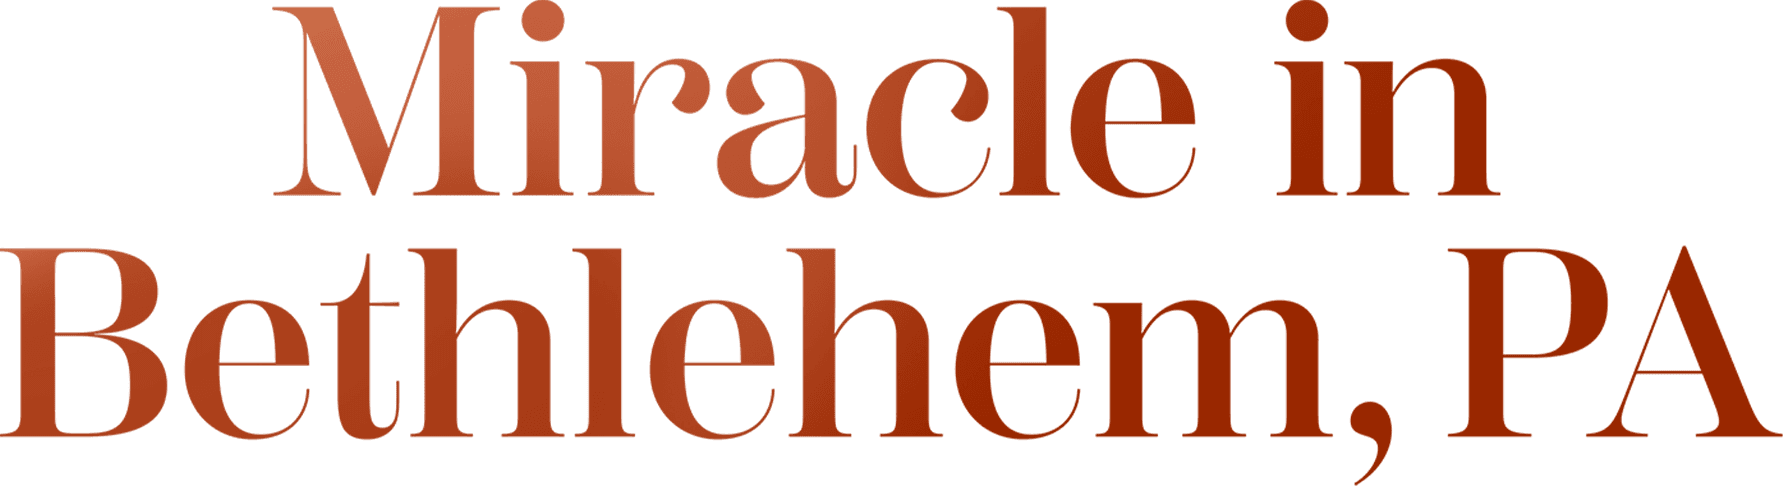 Miracle in Bethlehem, PA logo